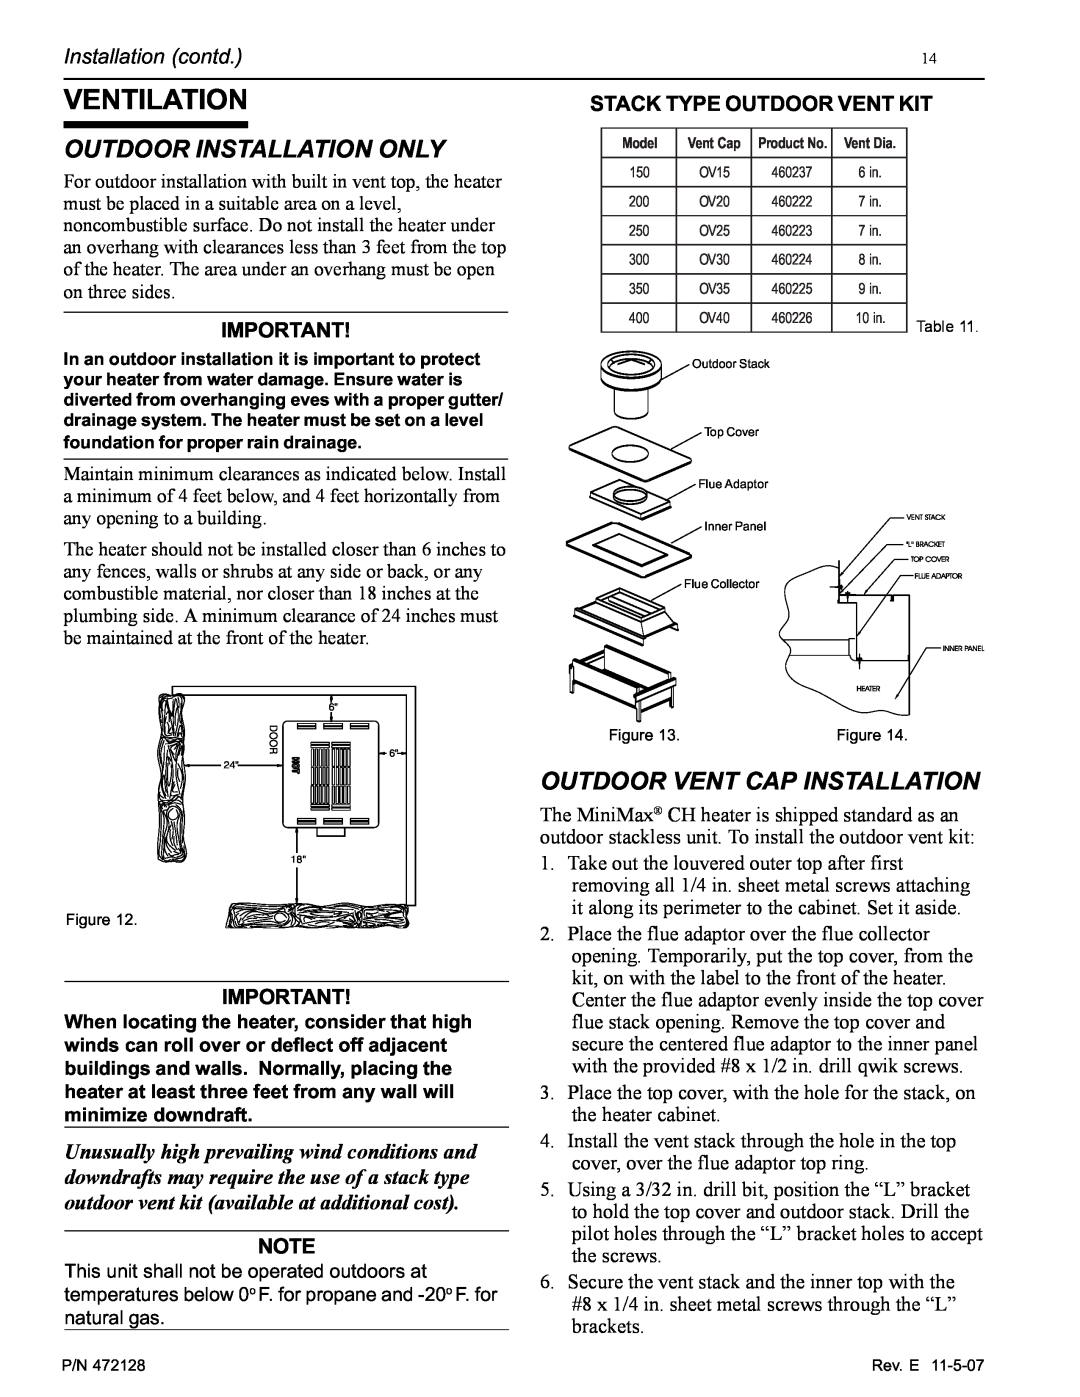 Pentair Hot Tub manual Ventilation, Outdoor Installation Only, Outdoor Vent Cap Installation, Stack Type Outdoor Vent Kit 